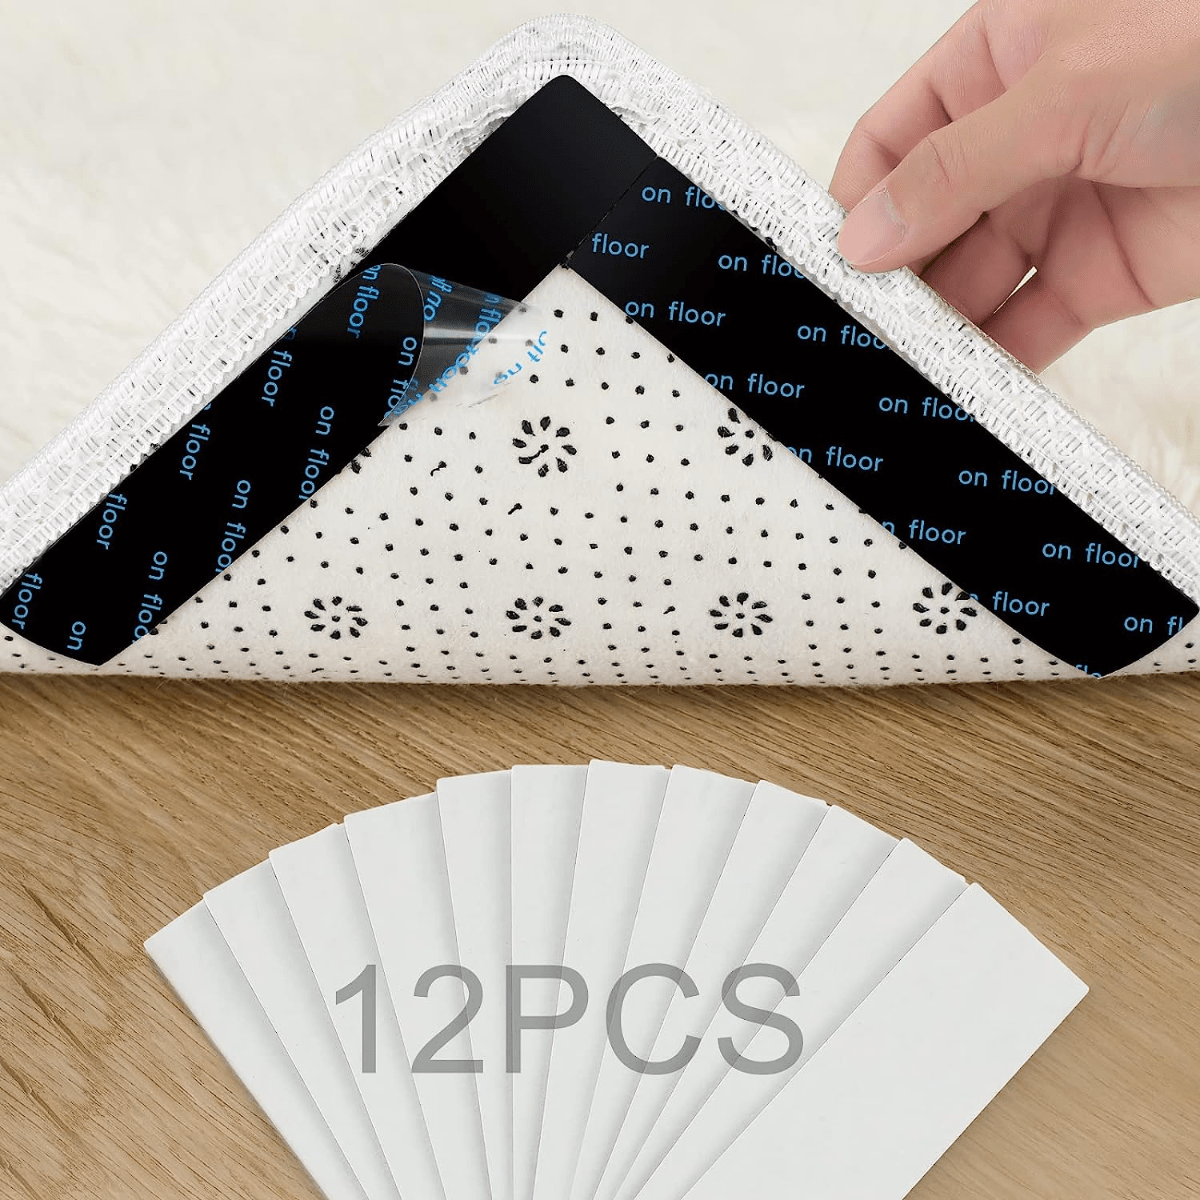 12 PCS Rug Tape, Reusable Washable Carpet Tape, Double Sided Non